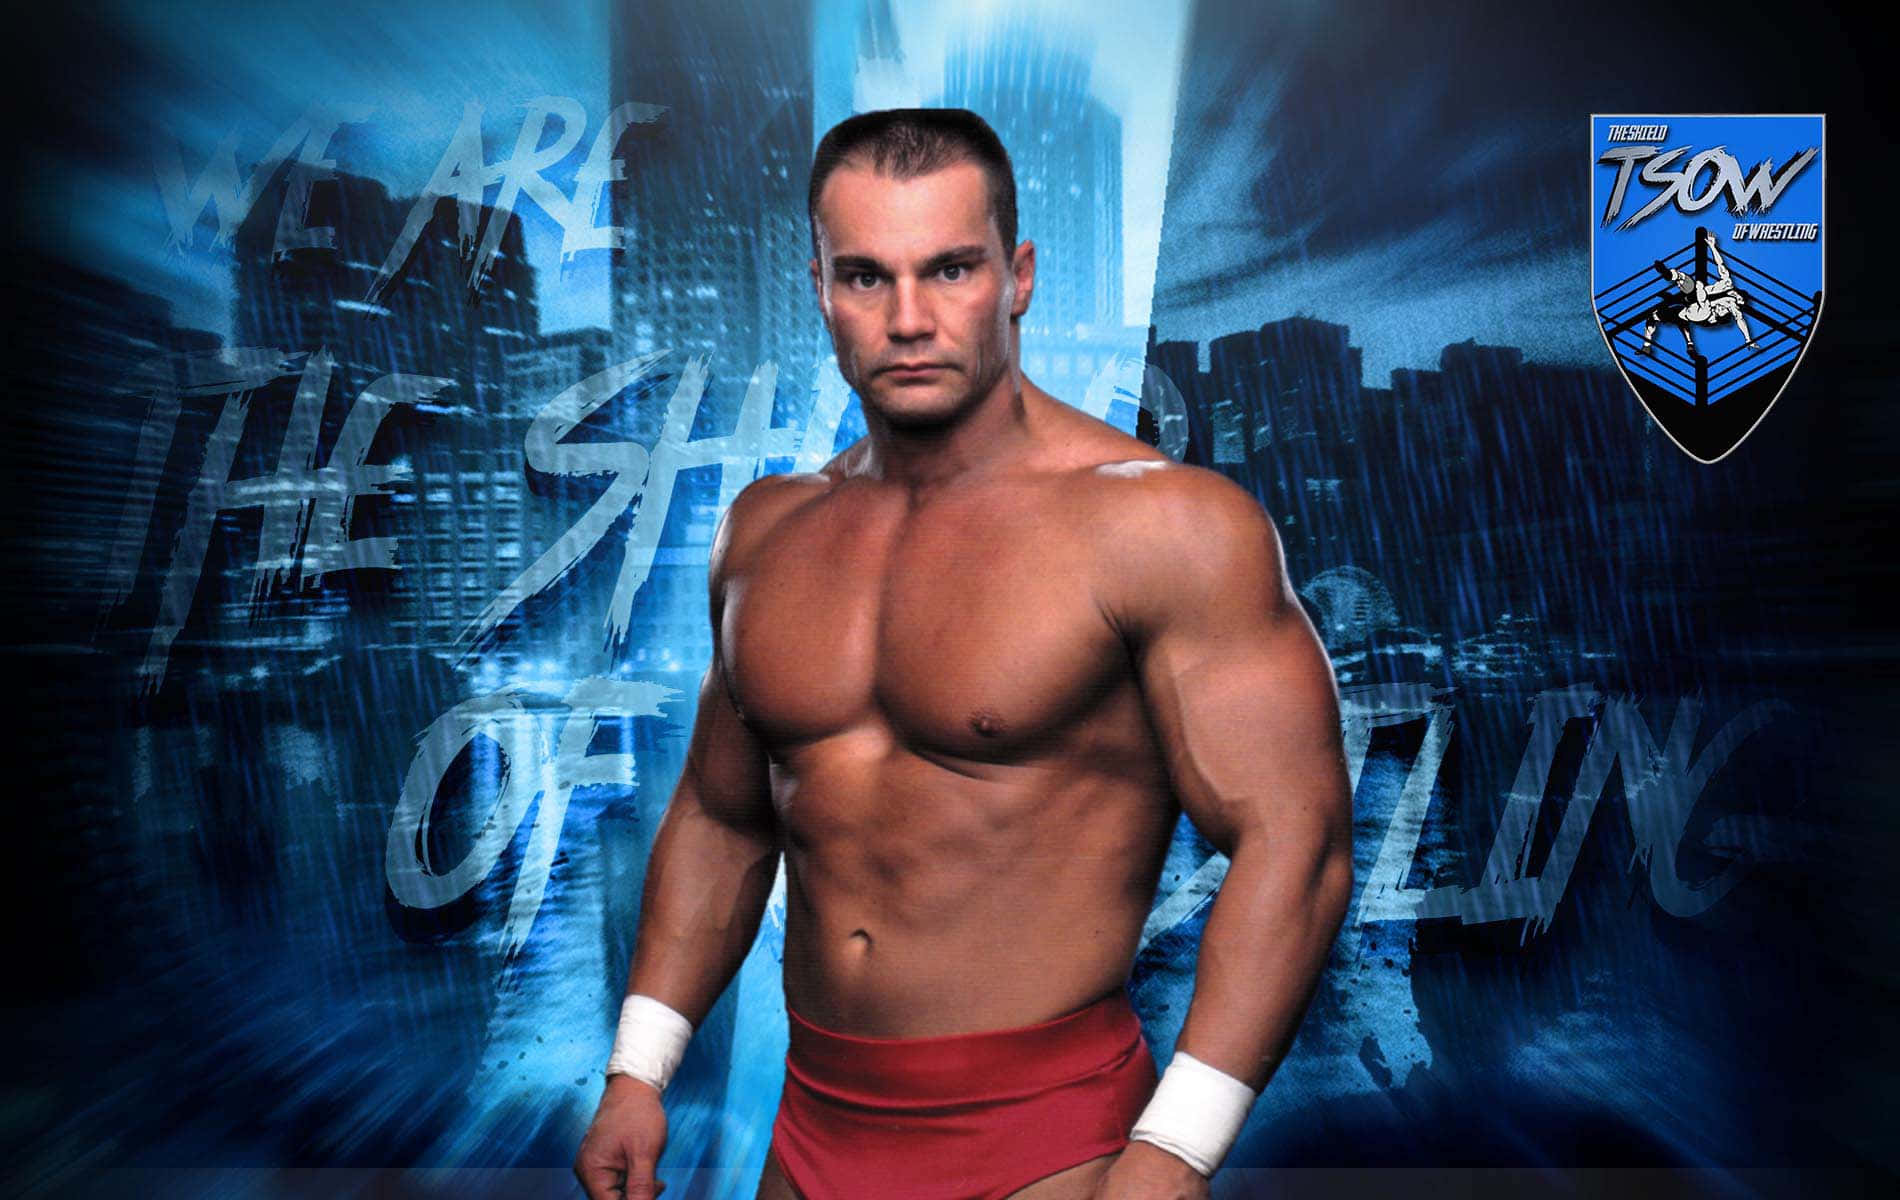 Canadian Professional Wrestler Lance Storm Digital Poster Wallpaper